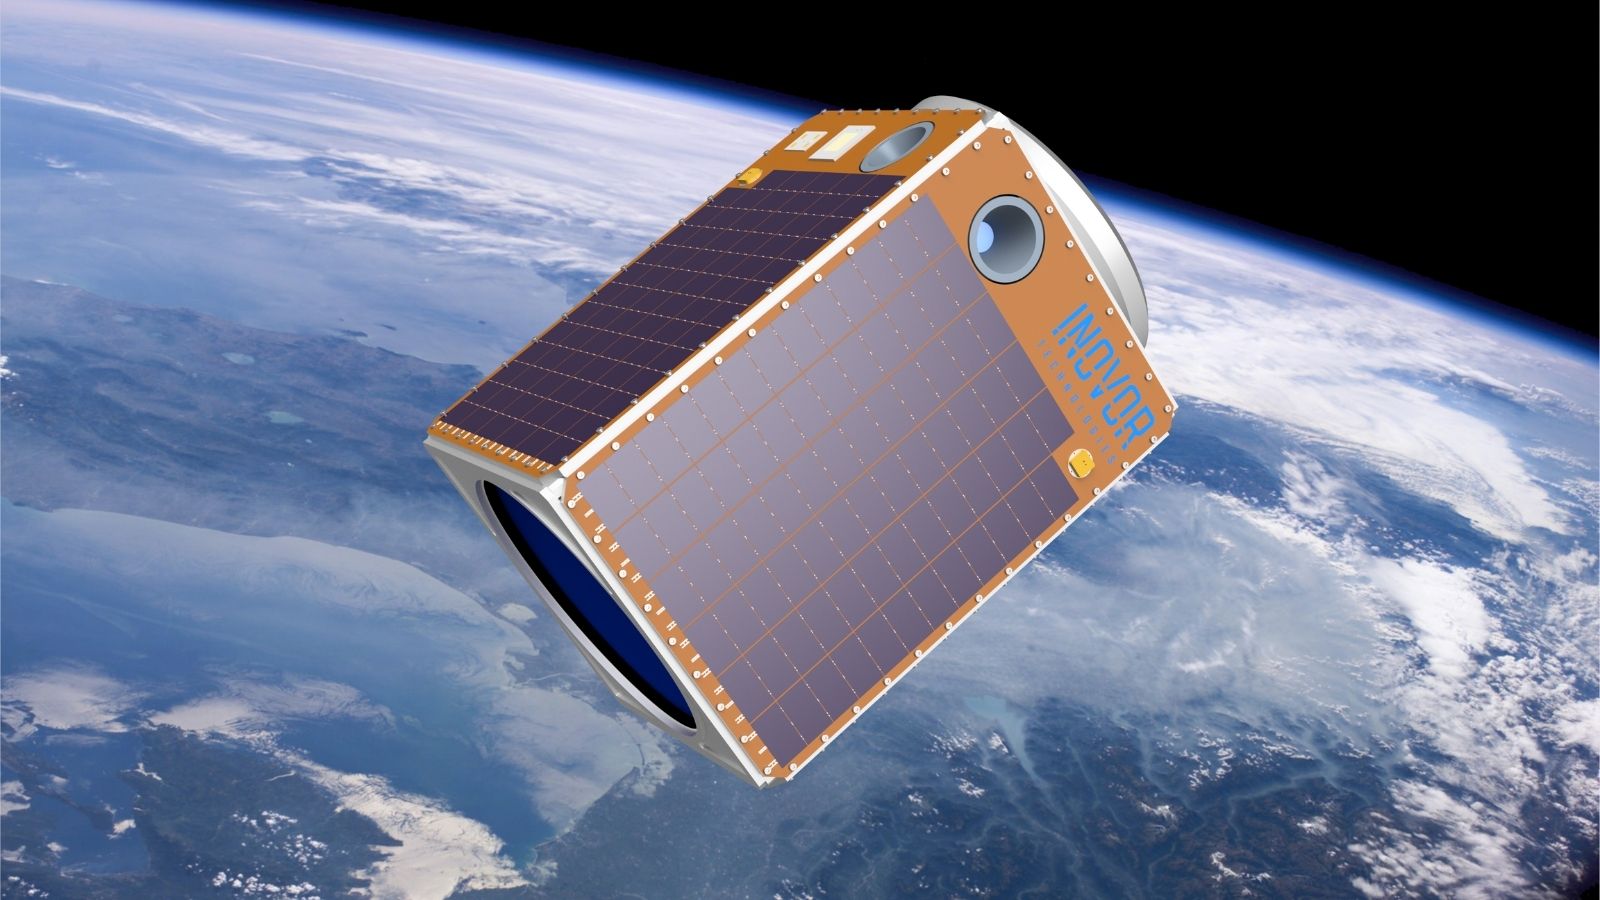 Inovor Technologies to build small satellites in Australia